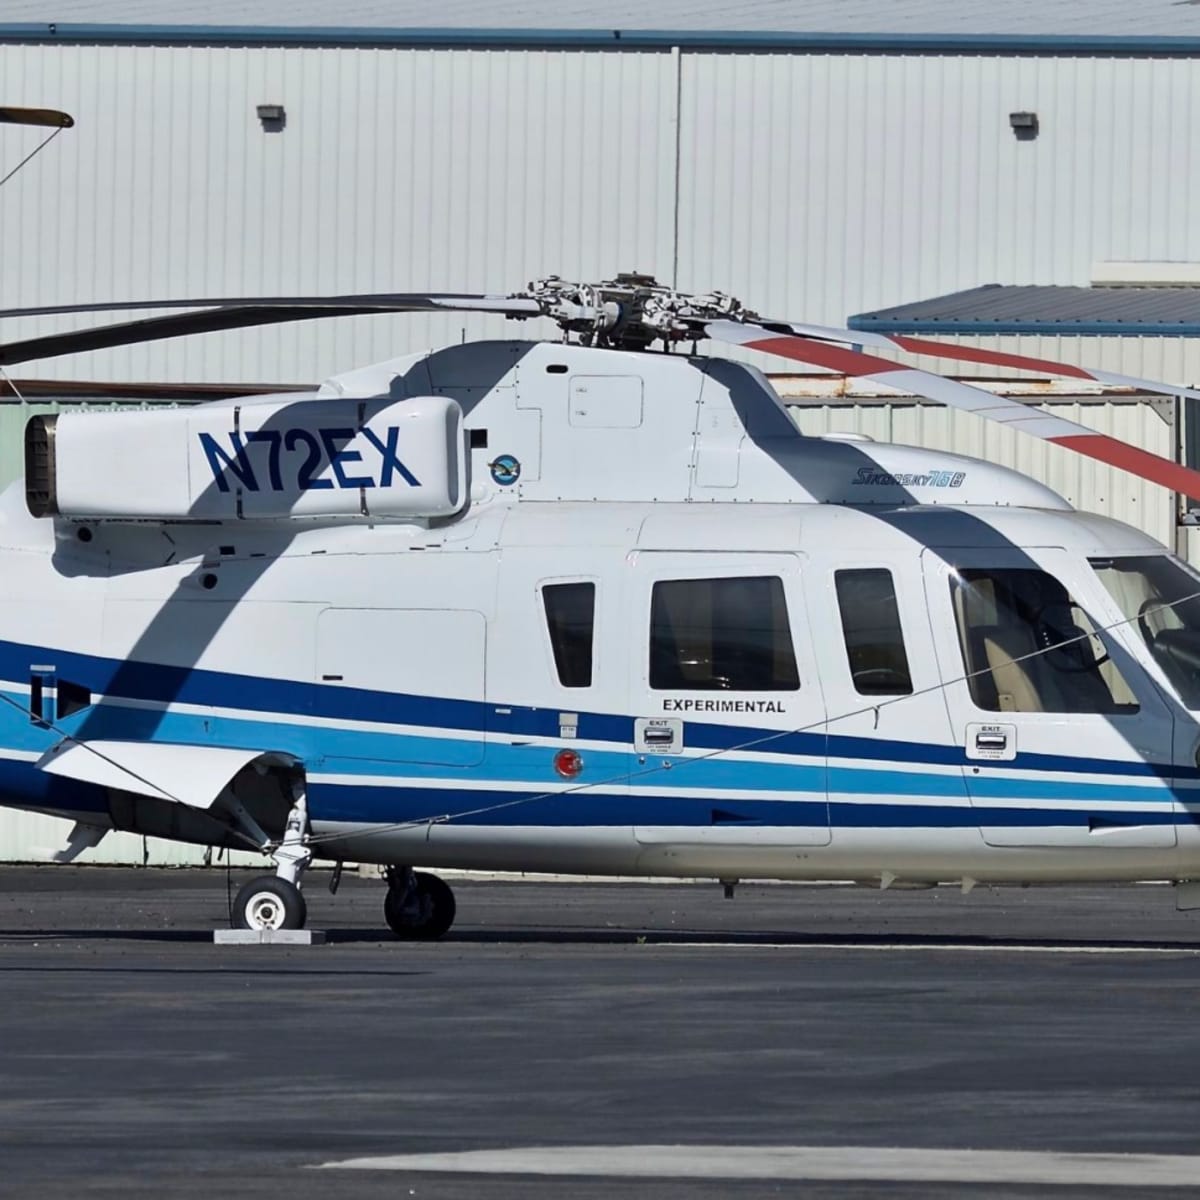 Investigation into helicopter crash that killed Kobe Bryant